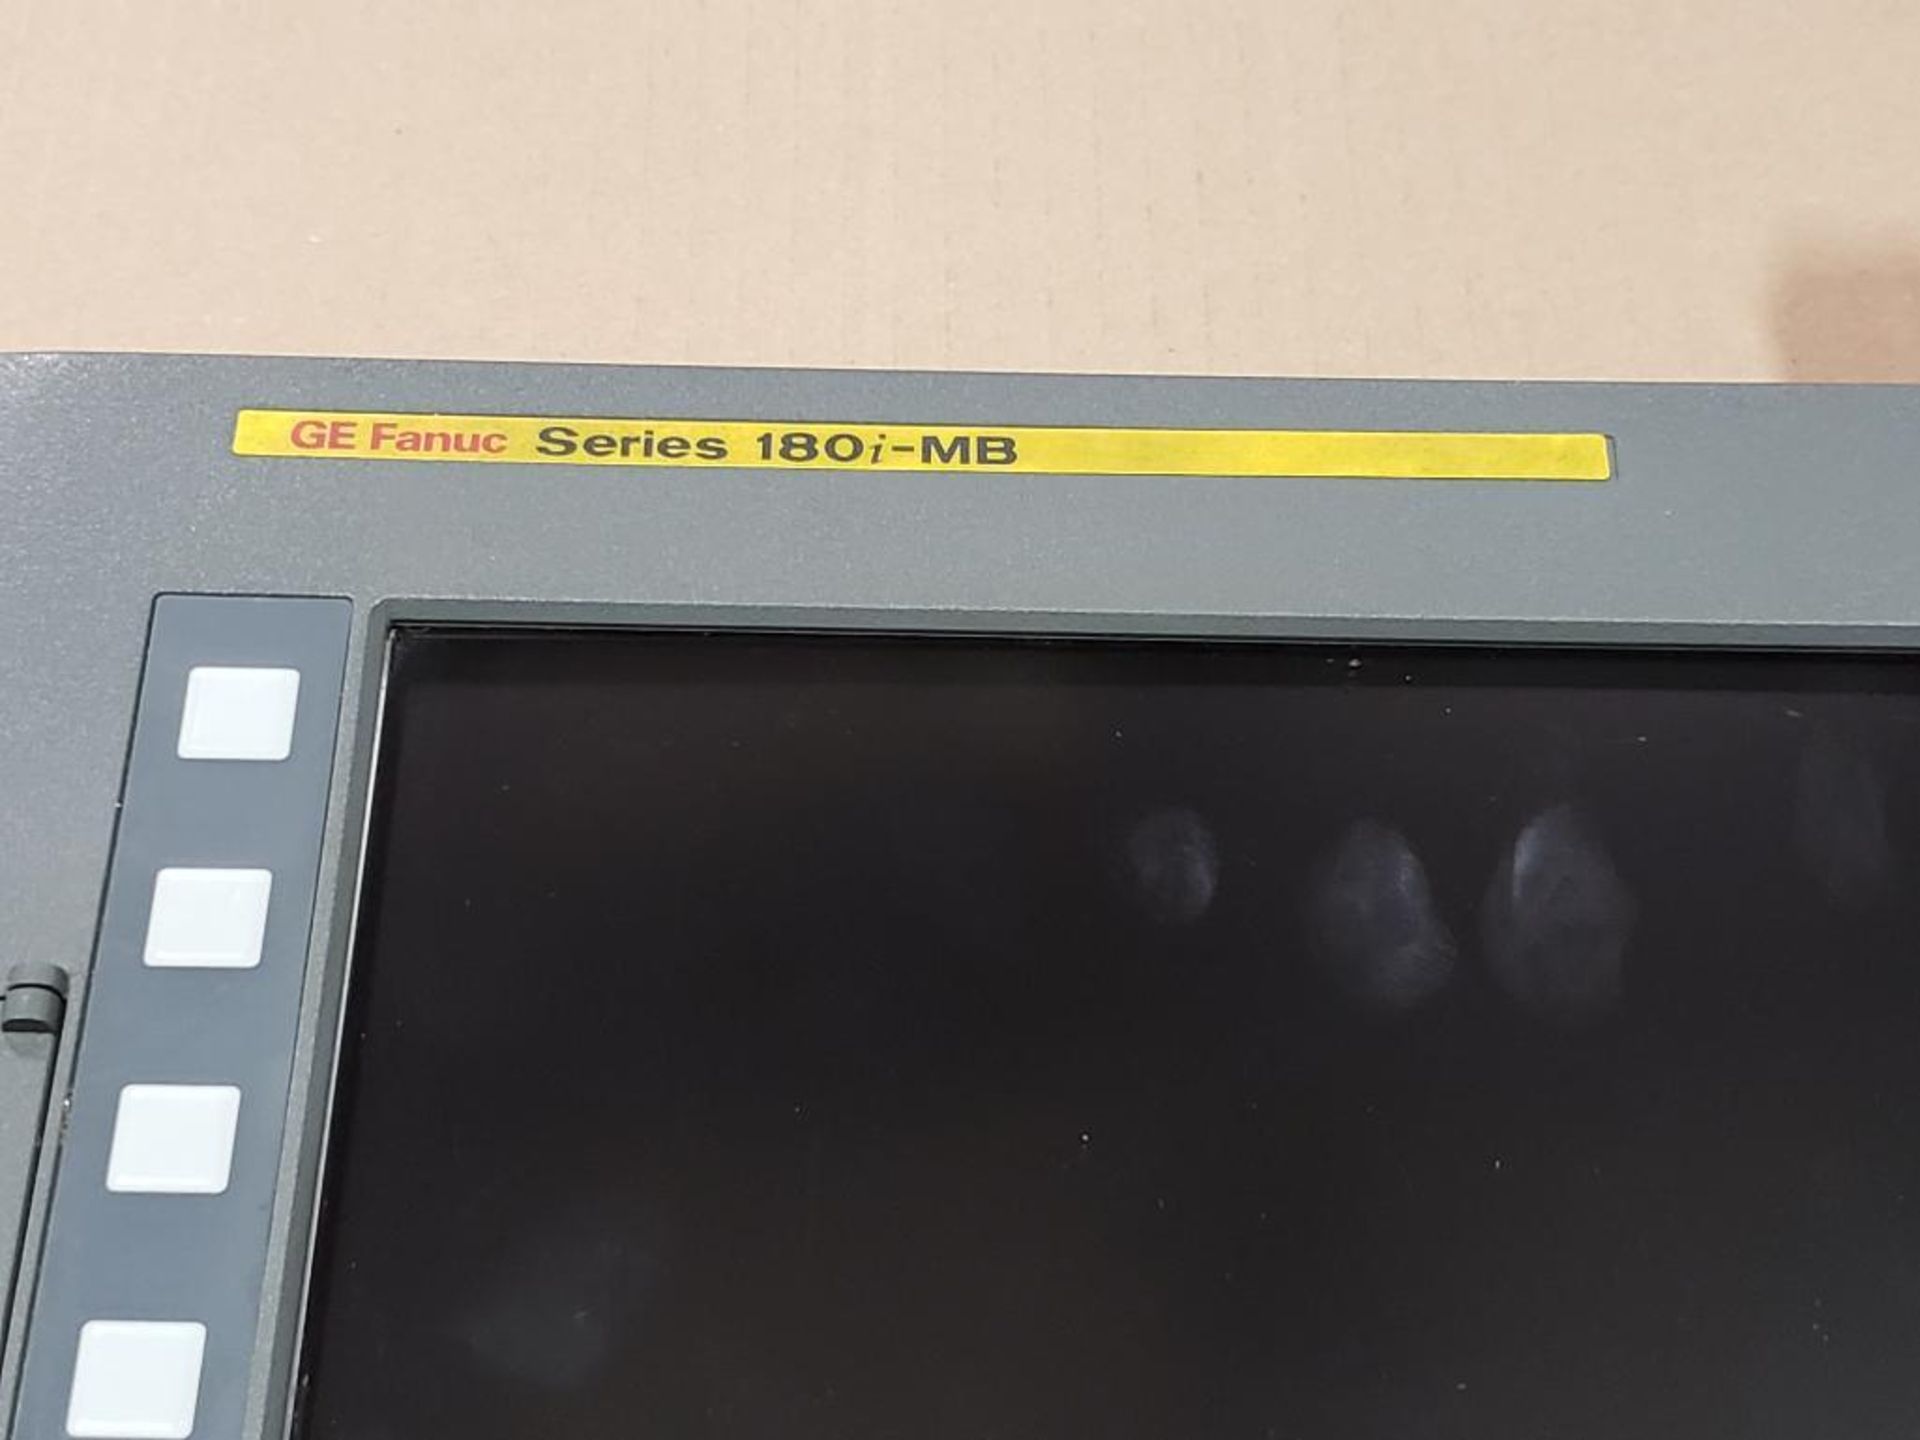 GE Fanuc Series 180i-MB base unit. A20B-8002-0500 display card. - Image 2 of 8